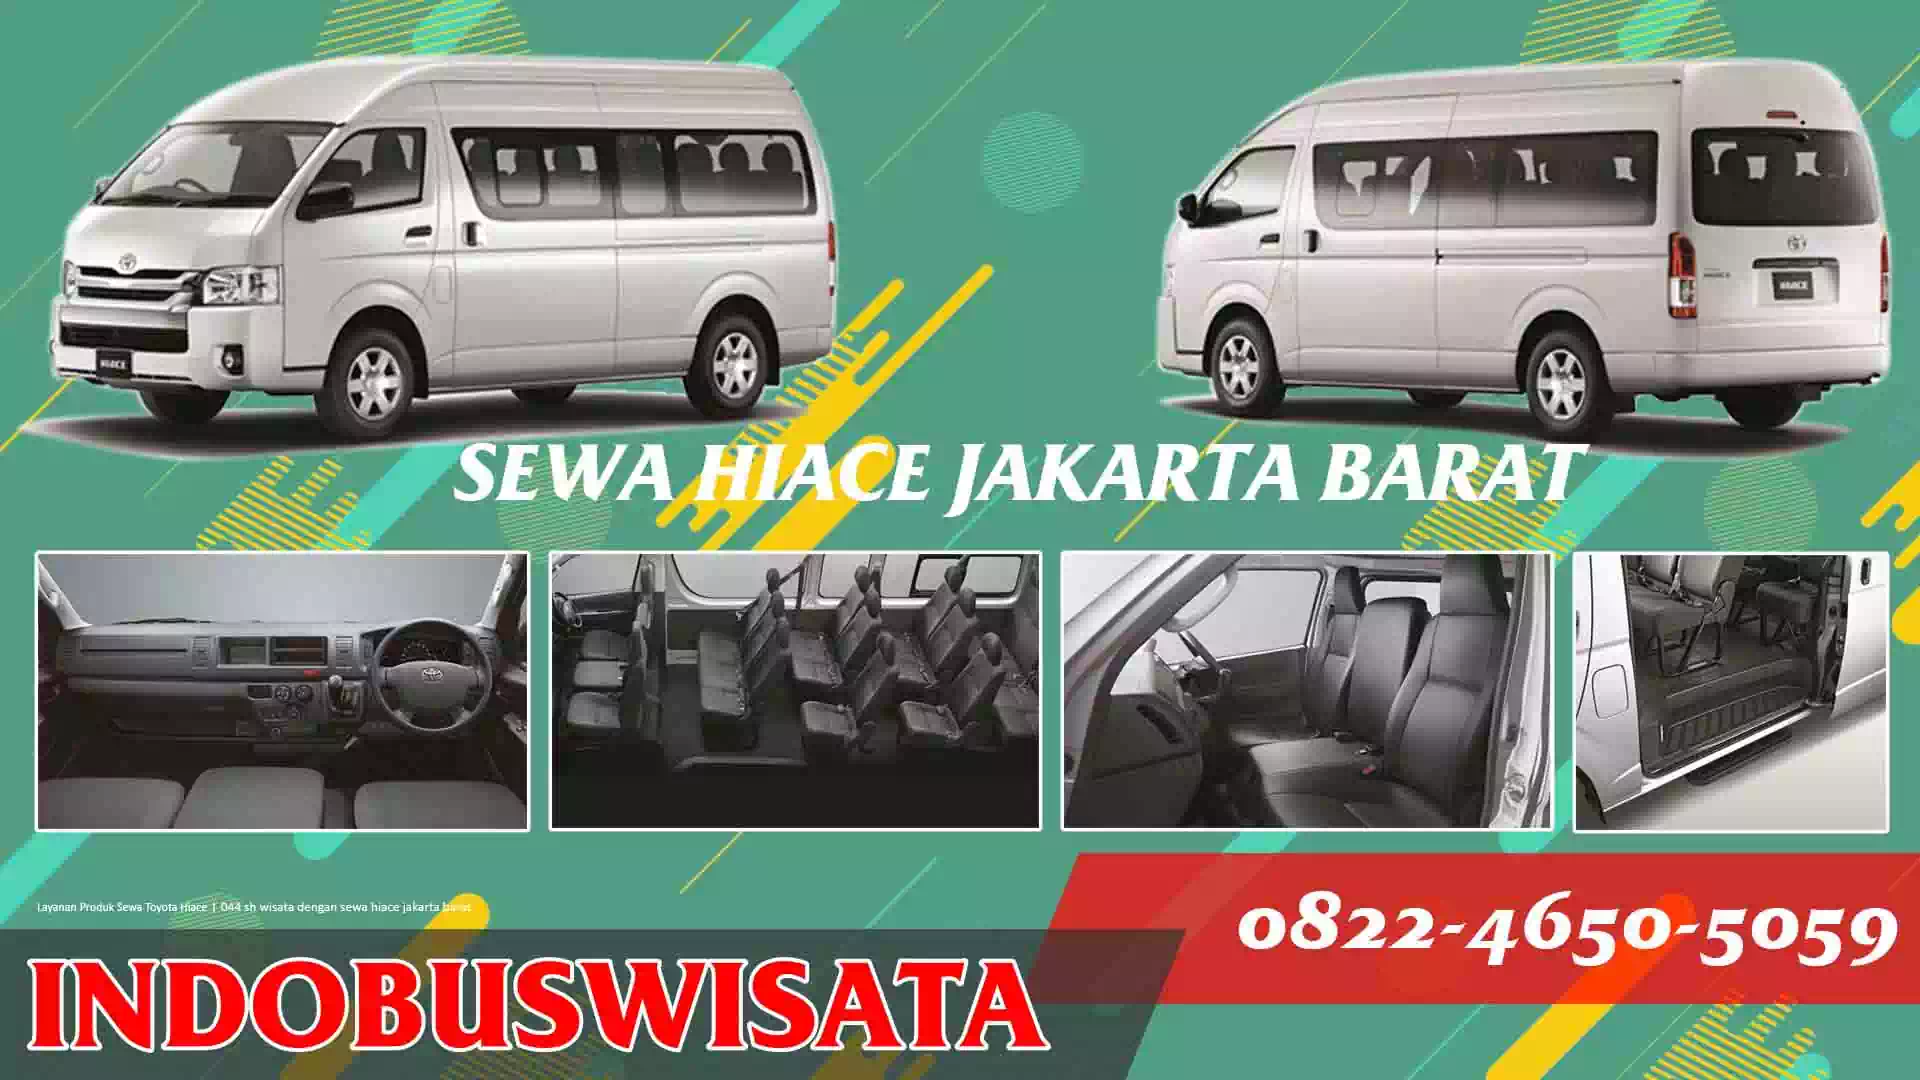 044 Sh Wisata Dengan Sewa Hiace Jakarta Barat Indobuswisata